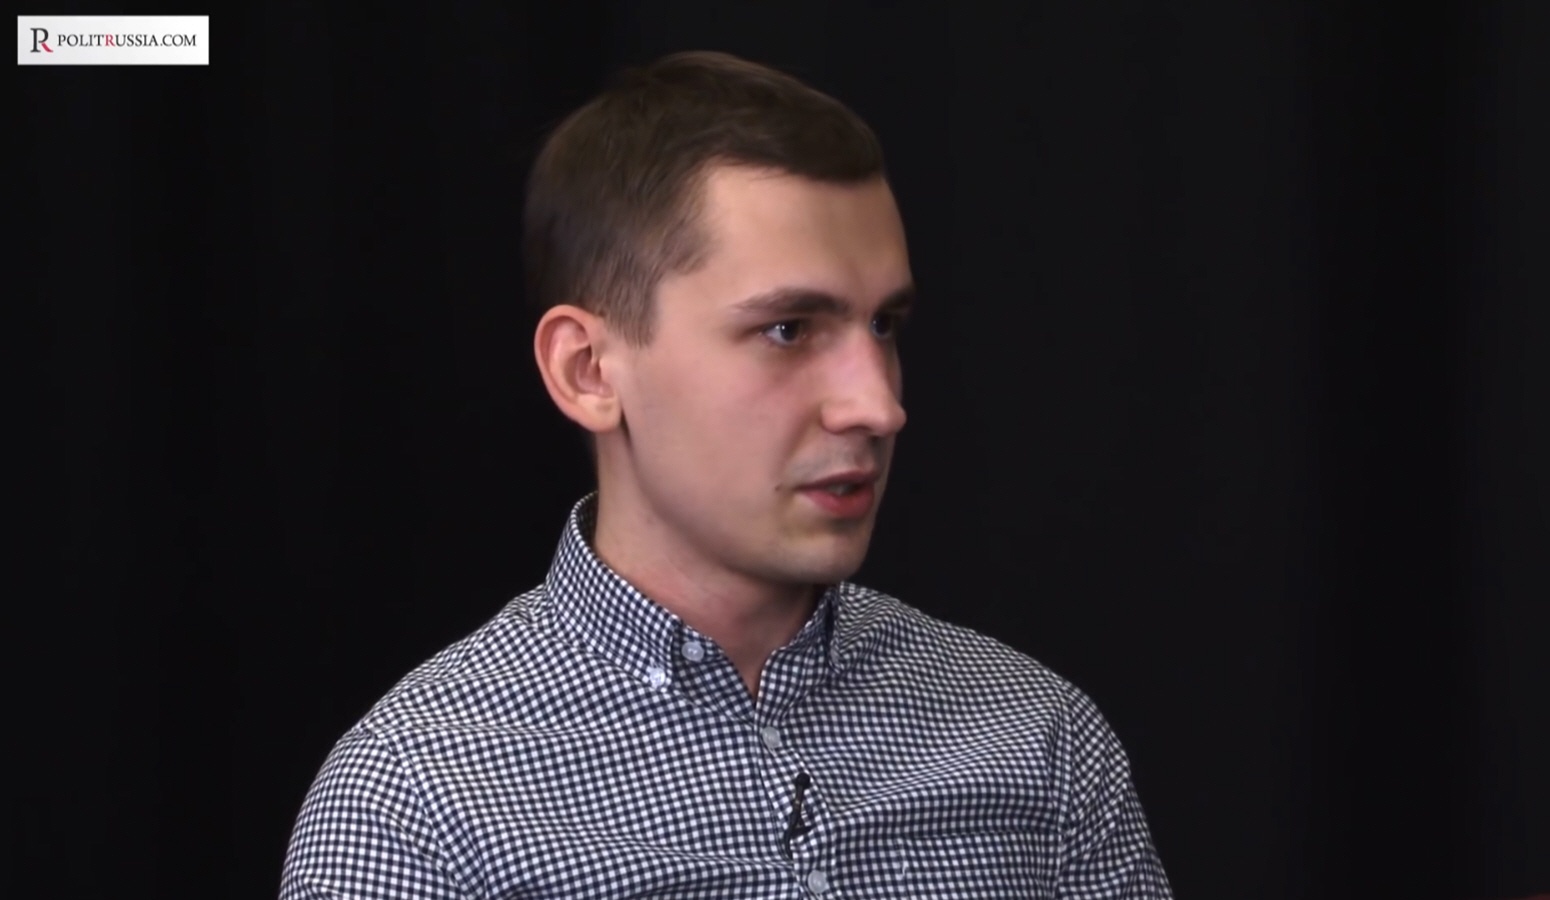 Илья Сафронов - специалист по кибербезопасности компании Group-IB